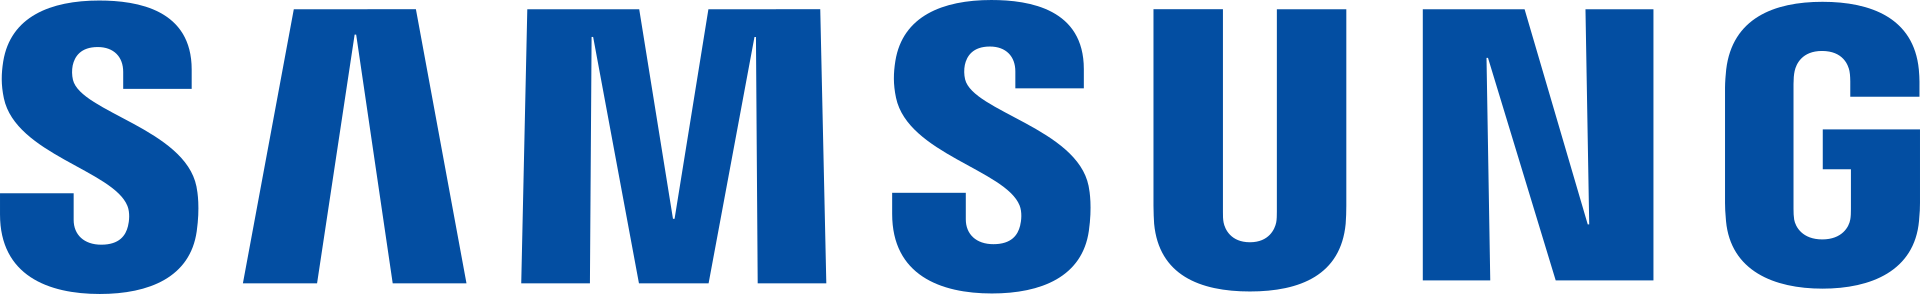 logo samsung 2020